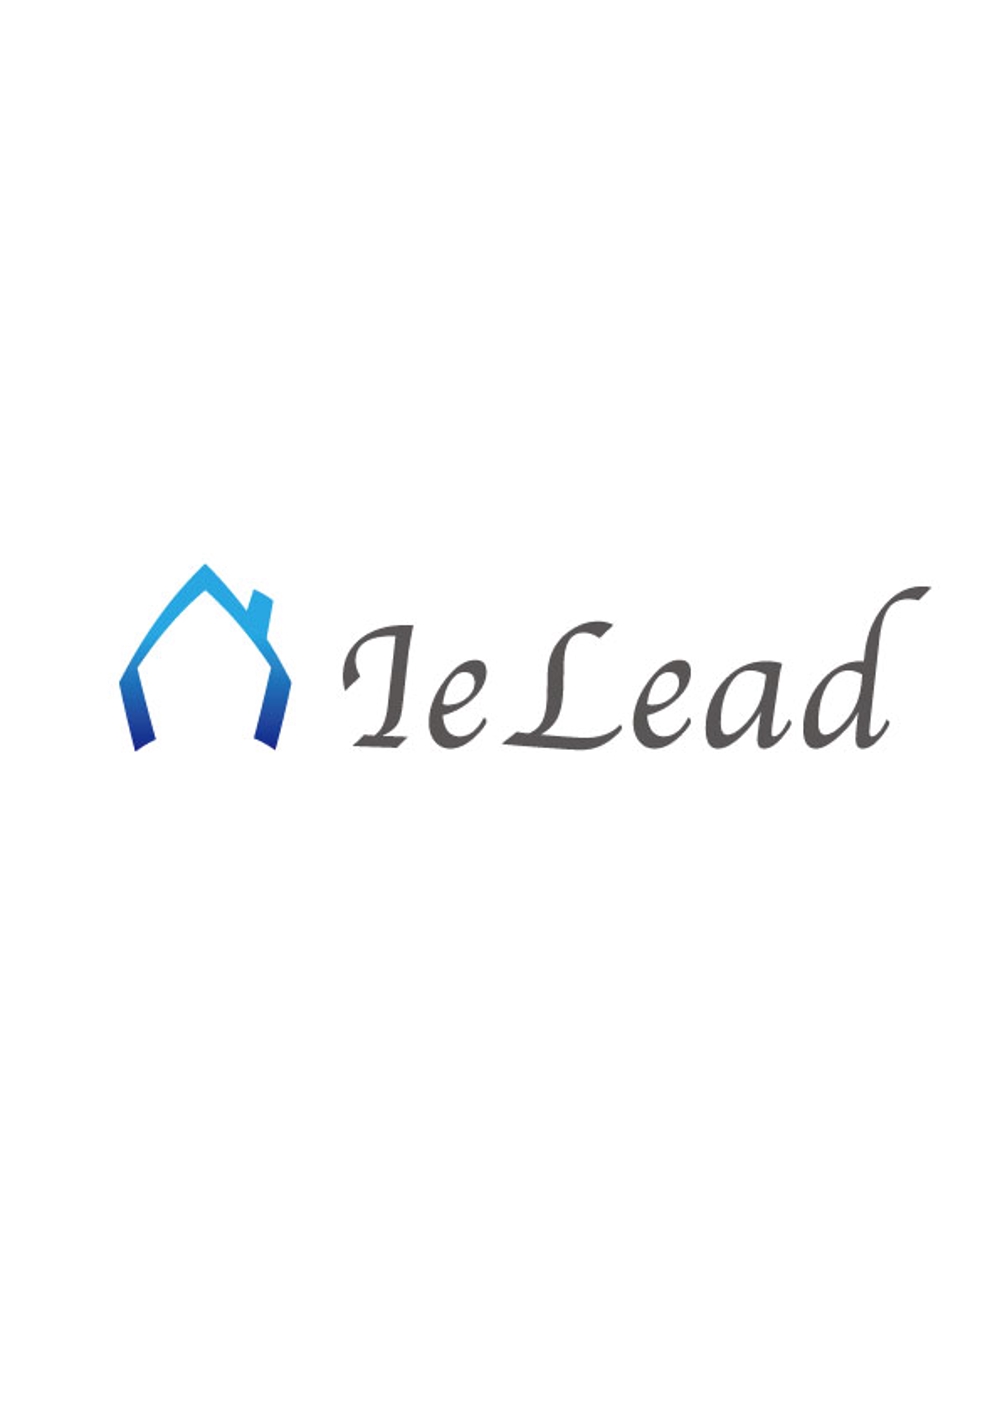 「IeLead」のロゴ作成